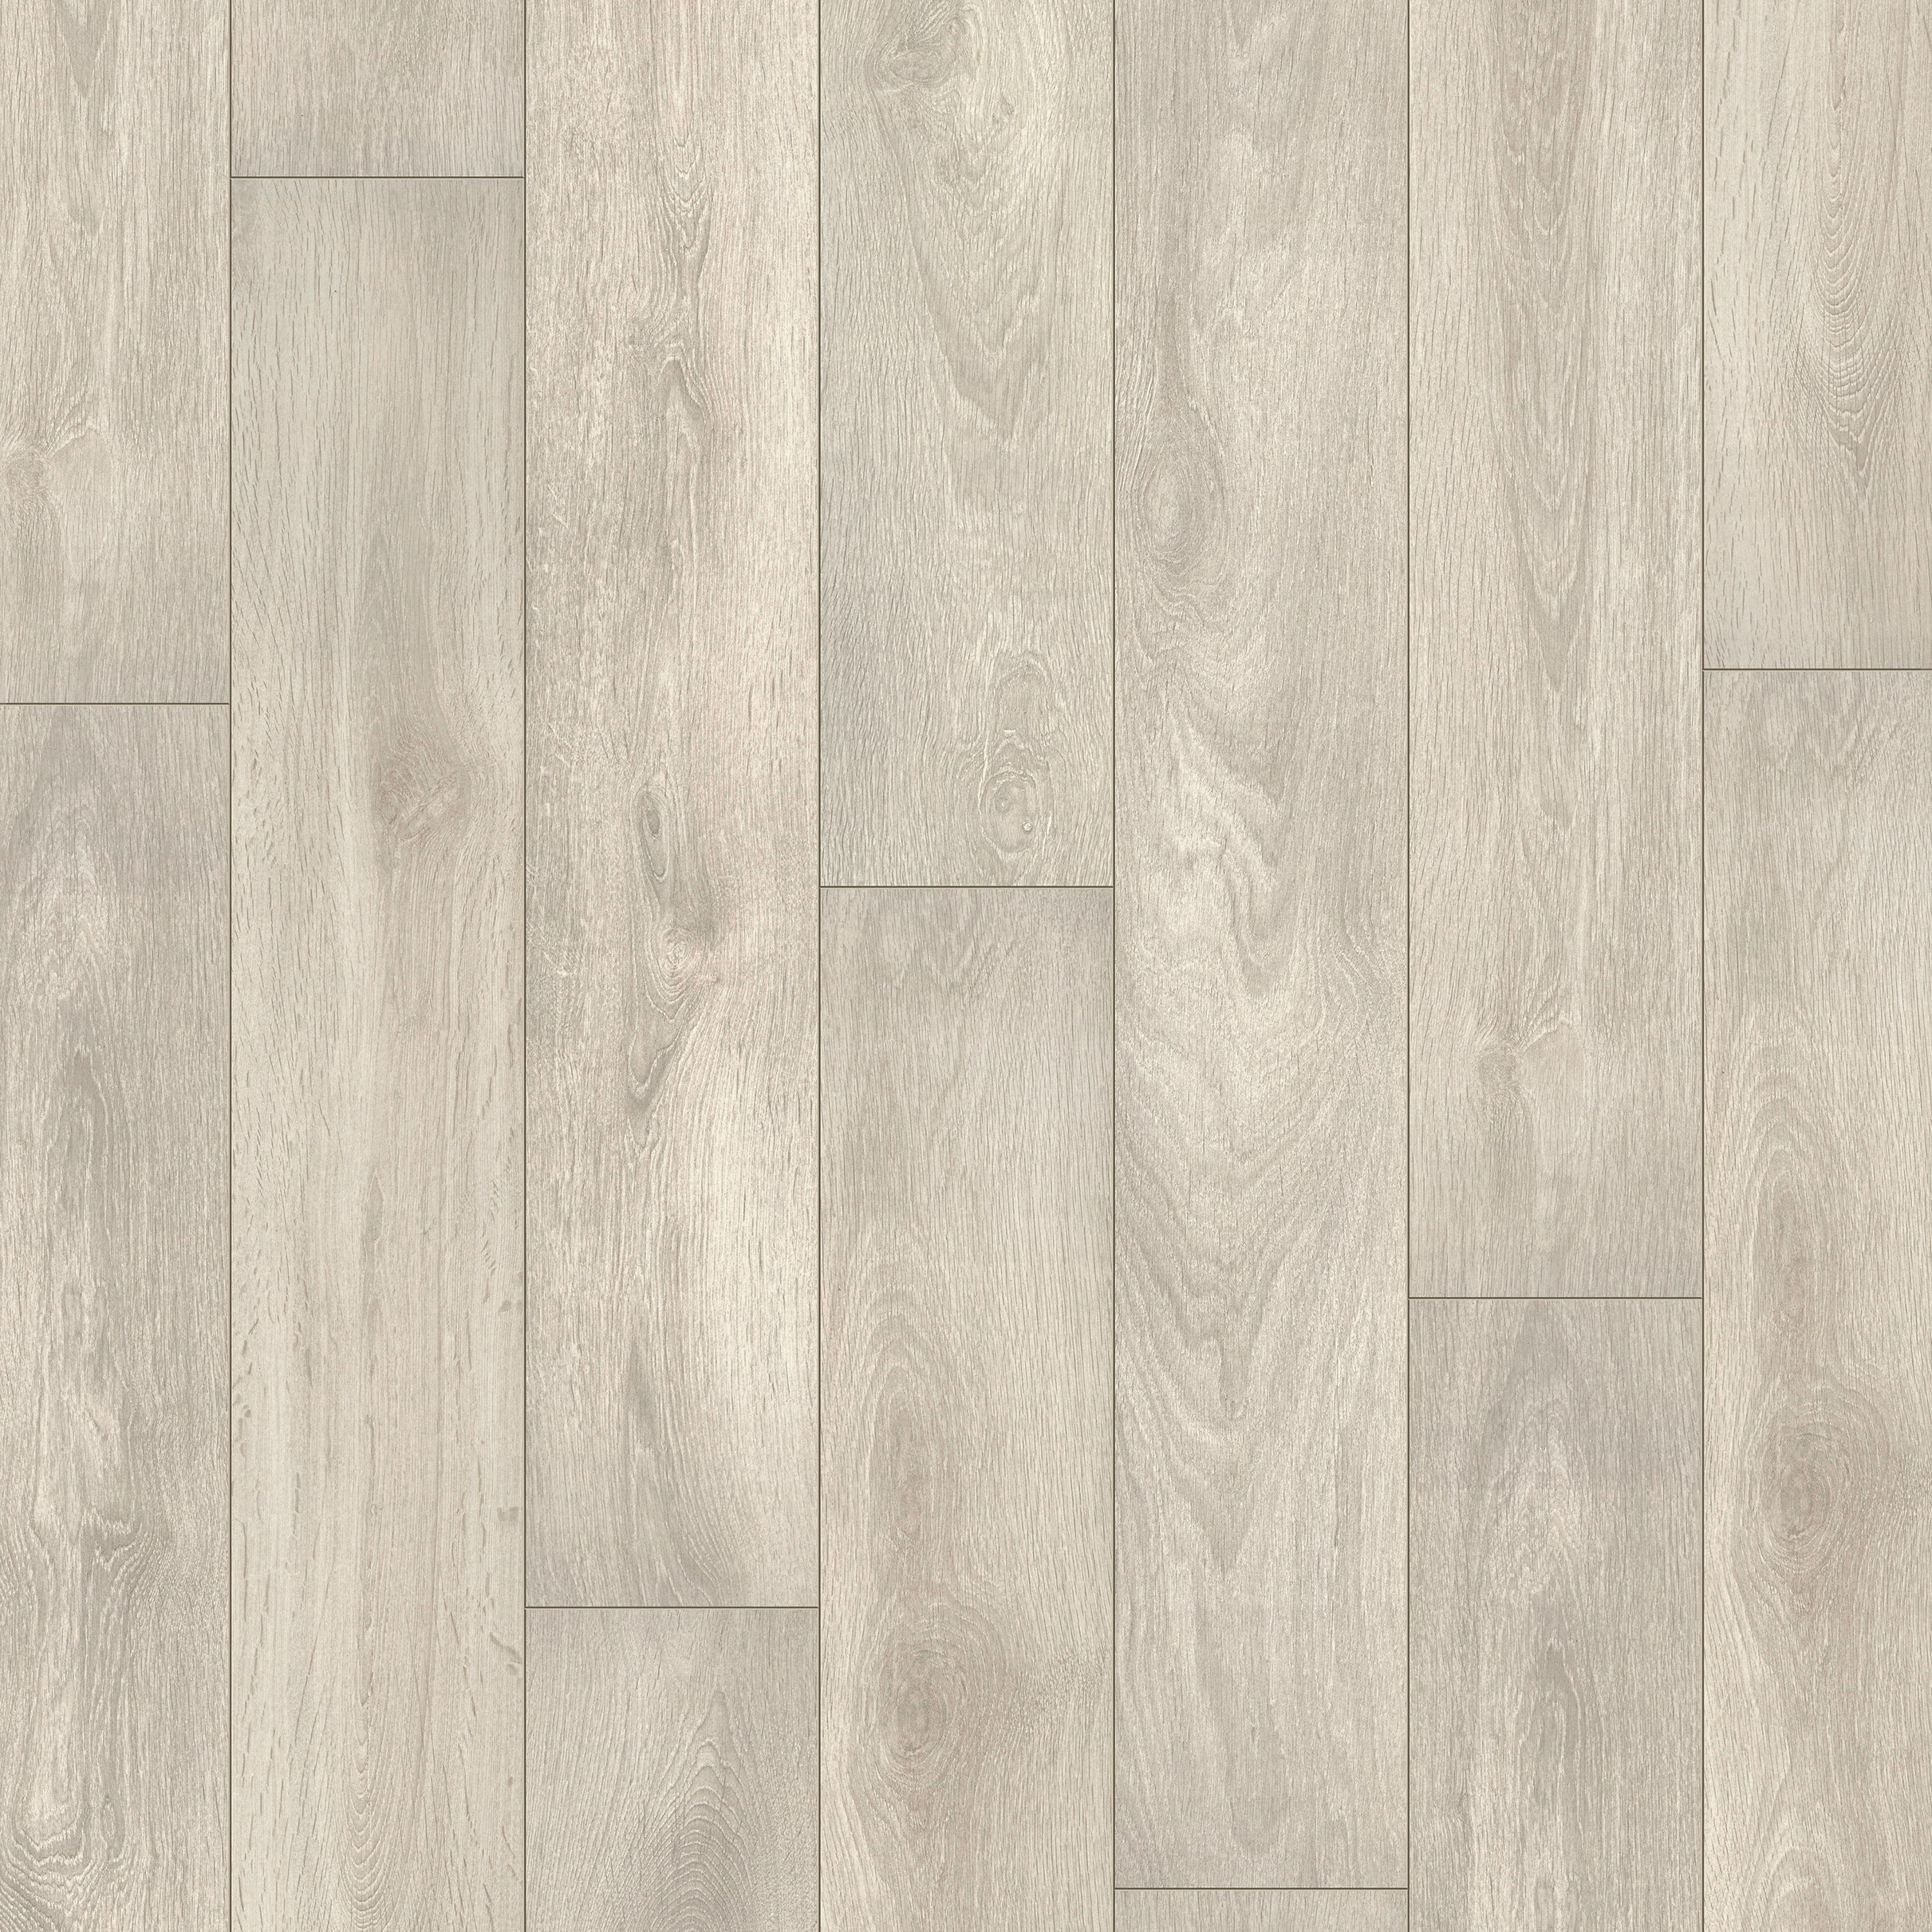 Image of Aspen Light Oak 8mm Laminate Flooring - 2.22m2